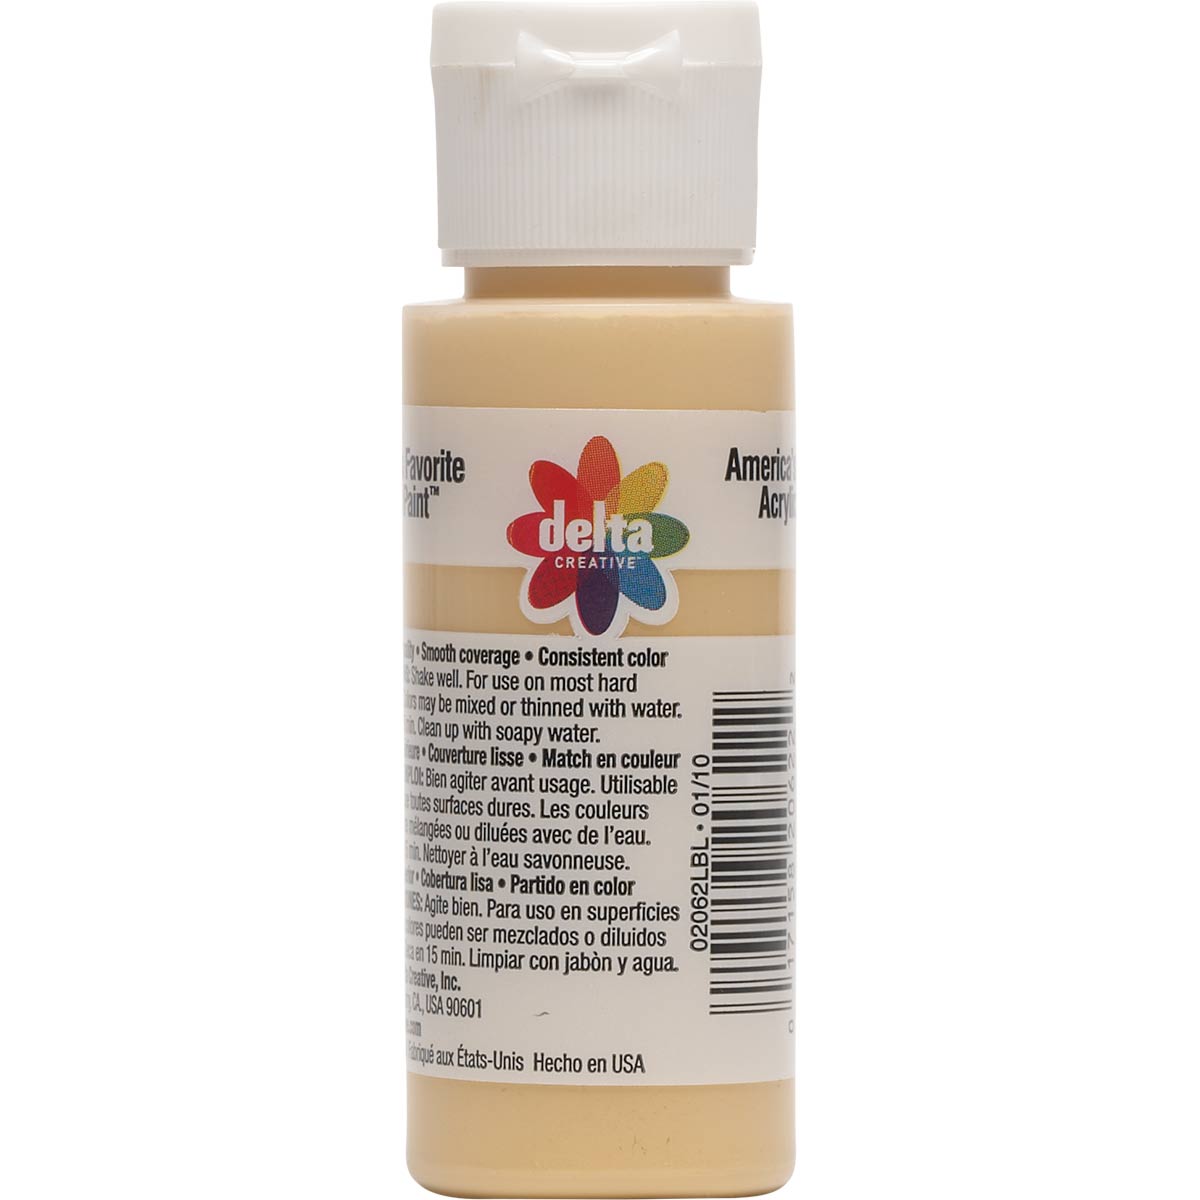 Delta Ceramcoat Acrylic Paint - Maple Sugar Tan, 2 oz. - 020620202W